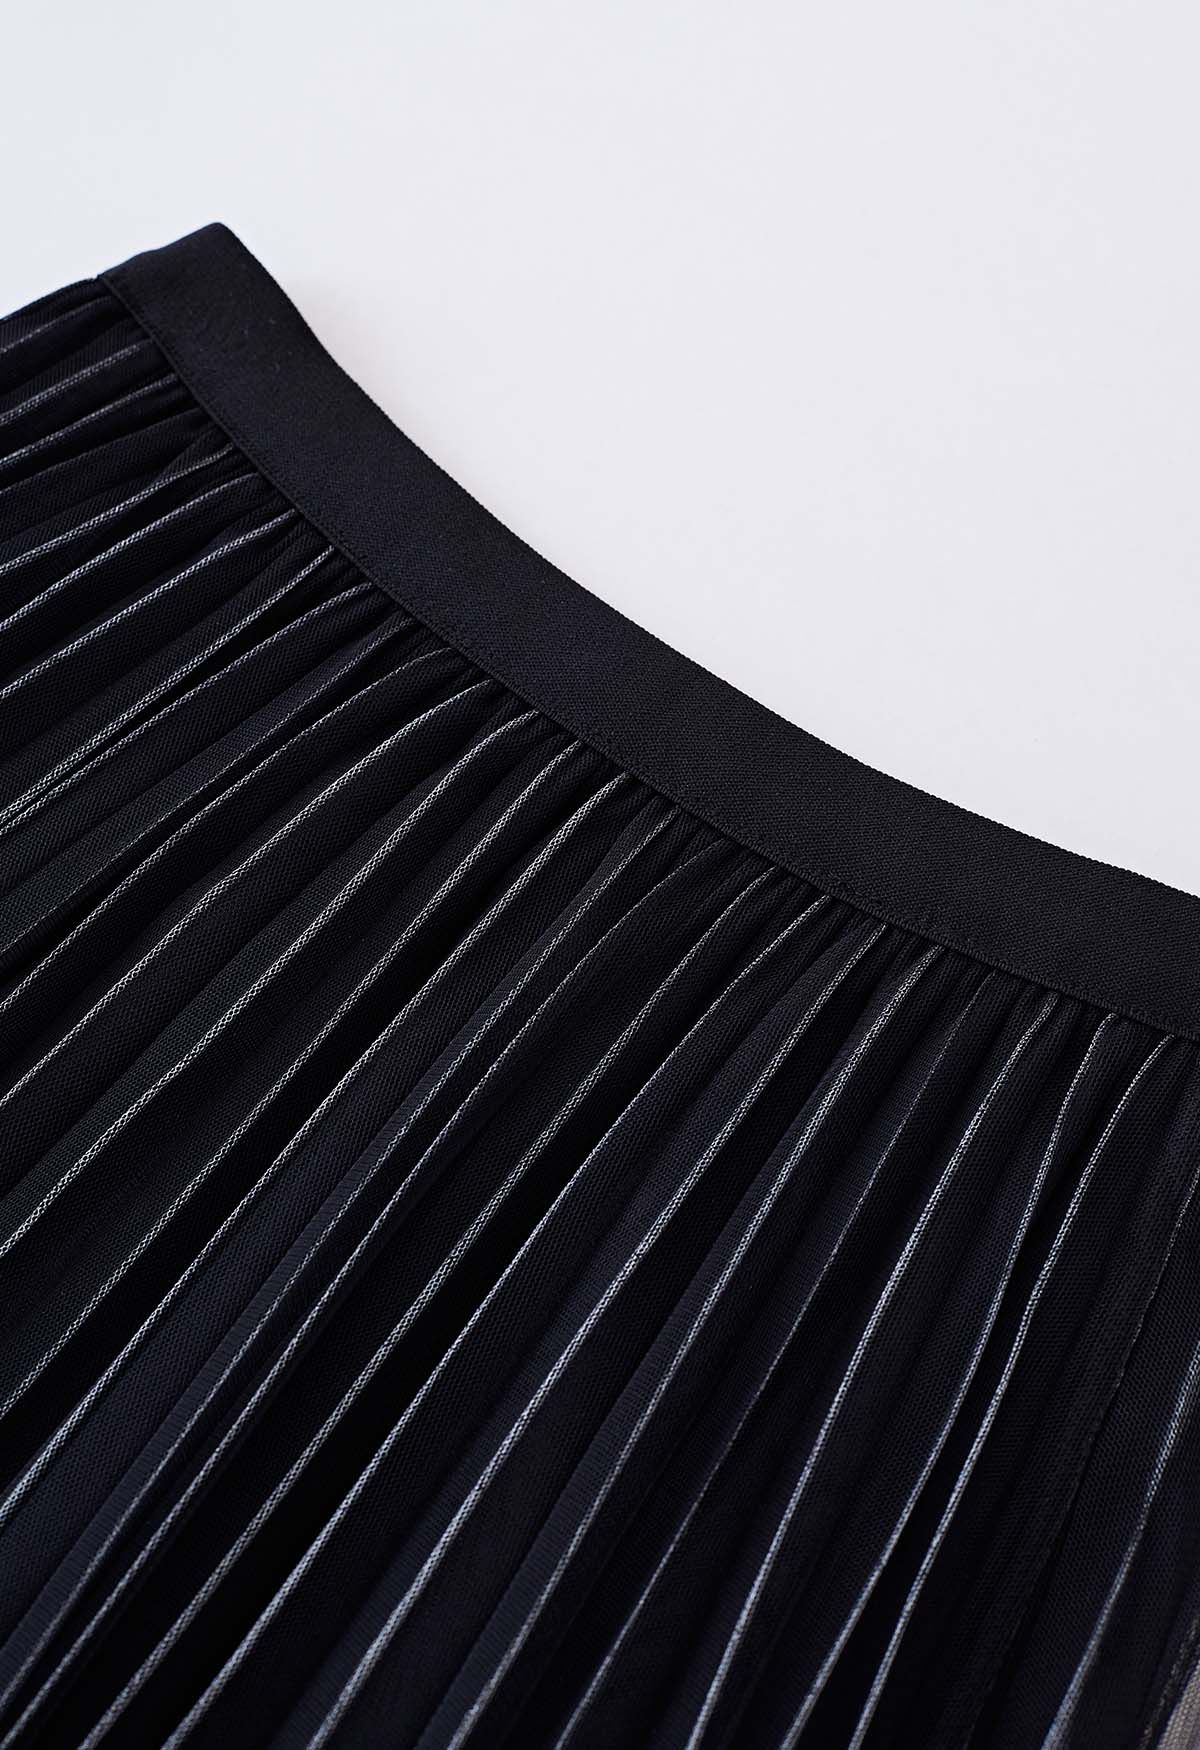 Contrast Lines Pleated Mesh Tulle Midi Skirt in Black